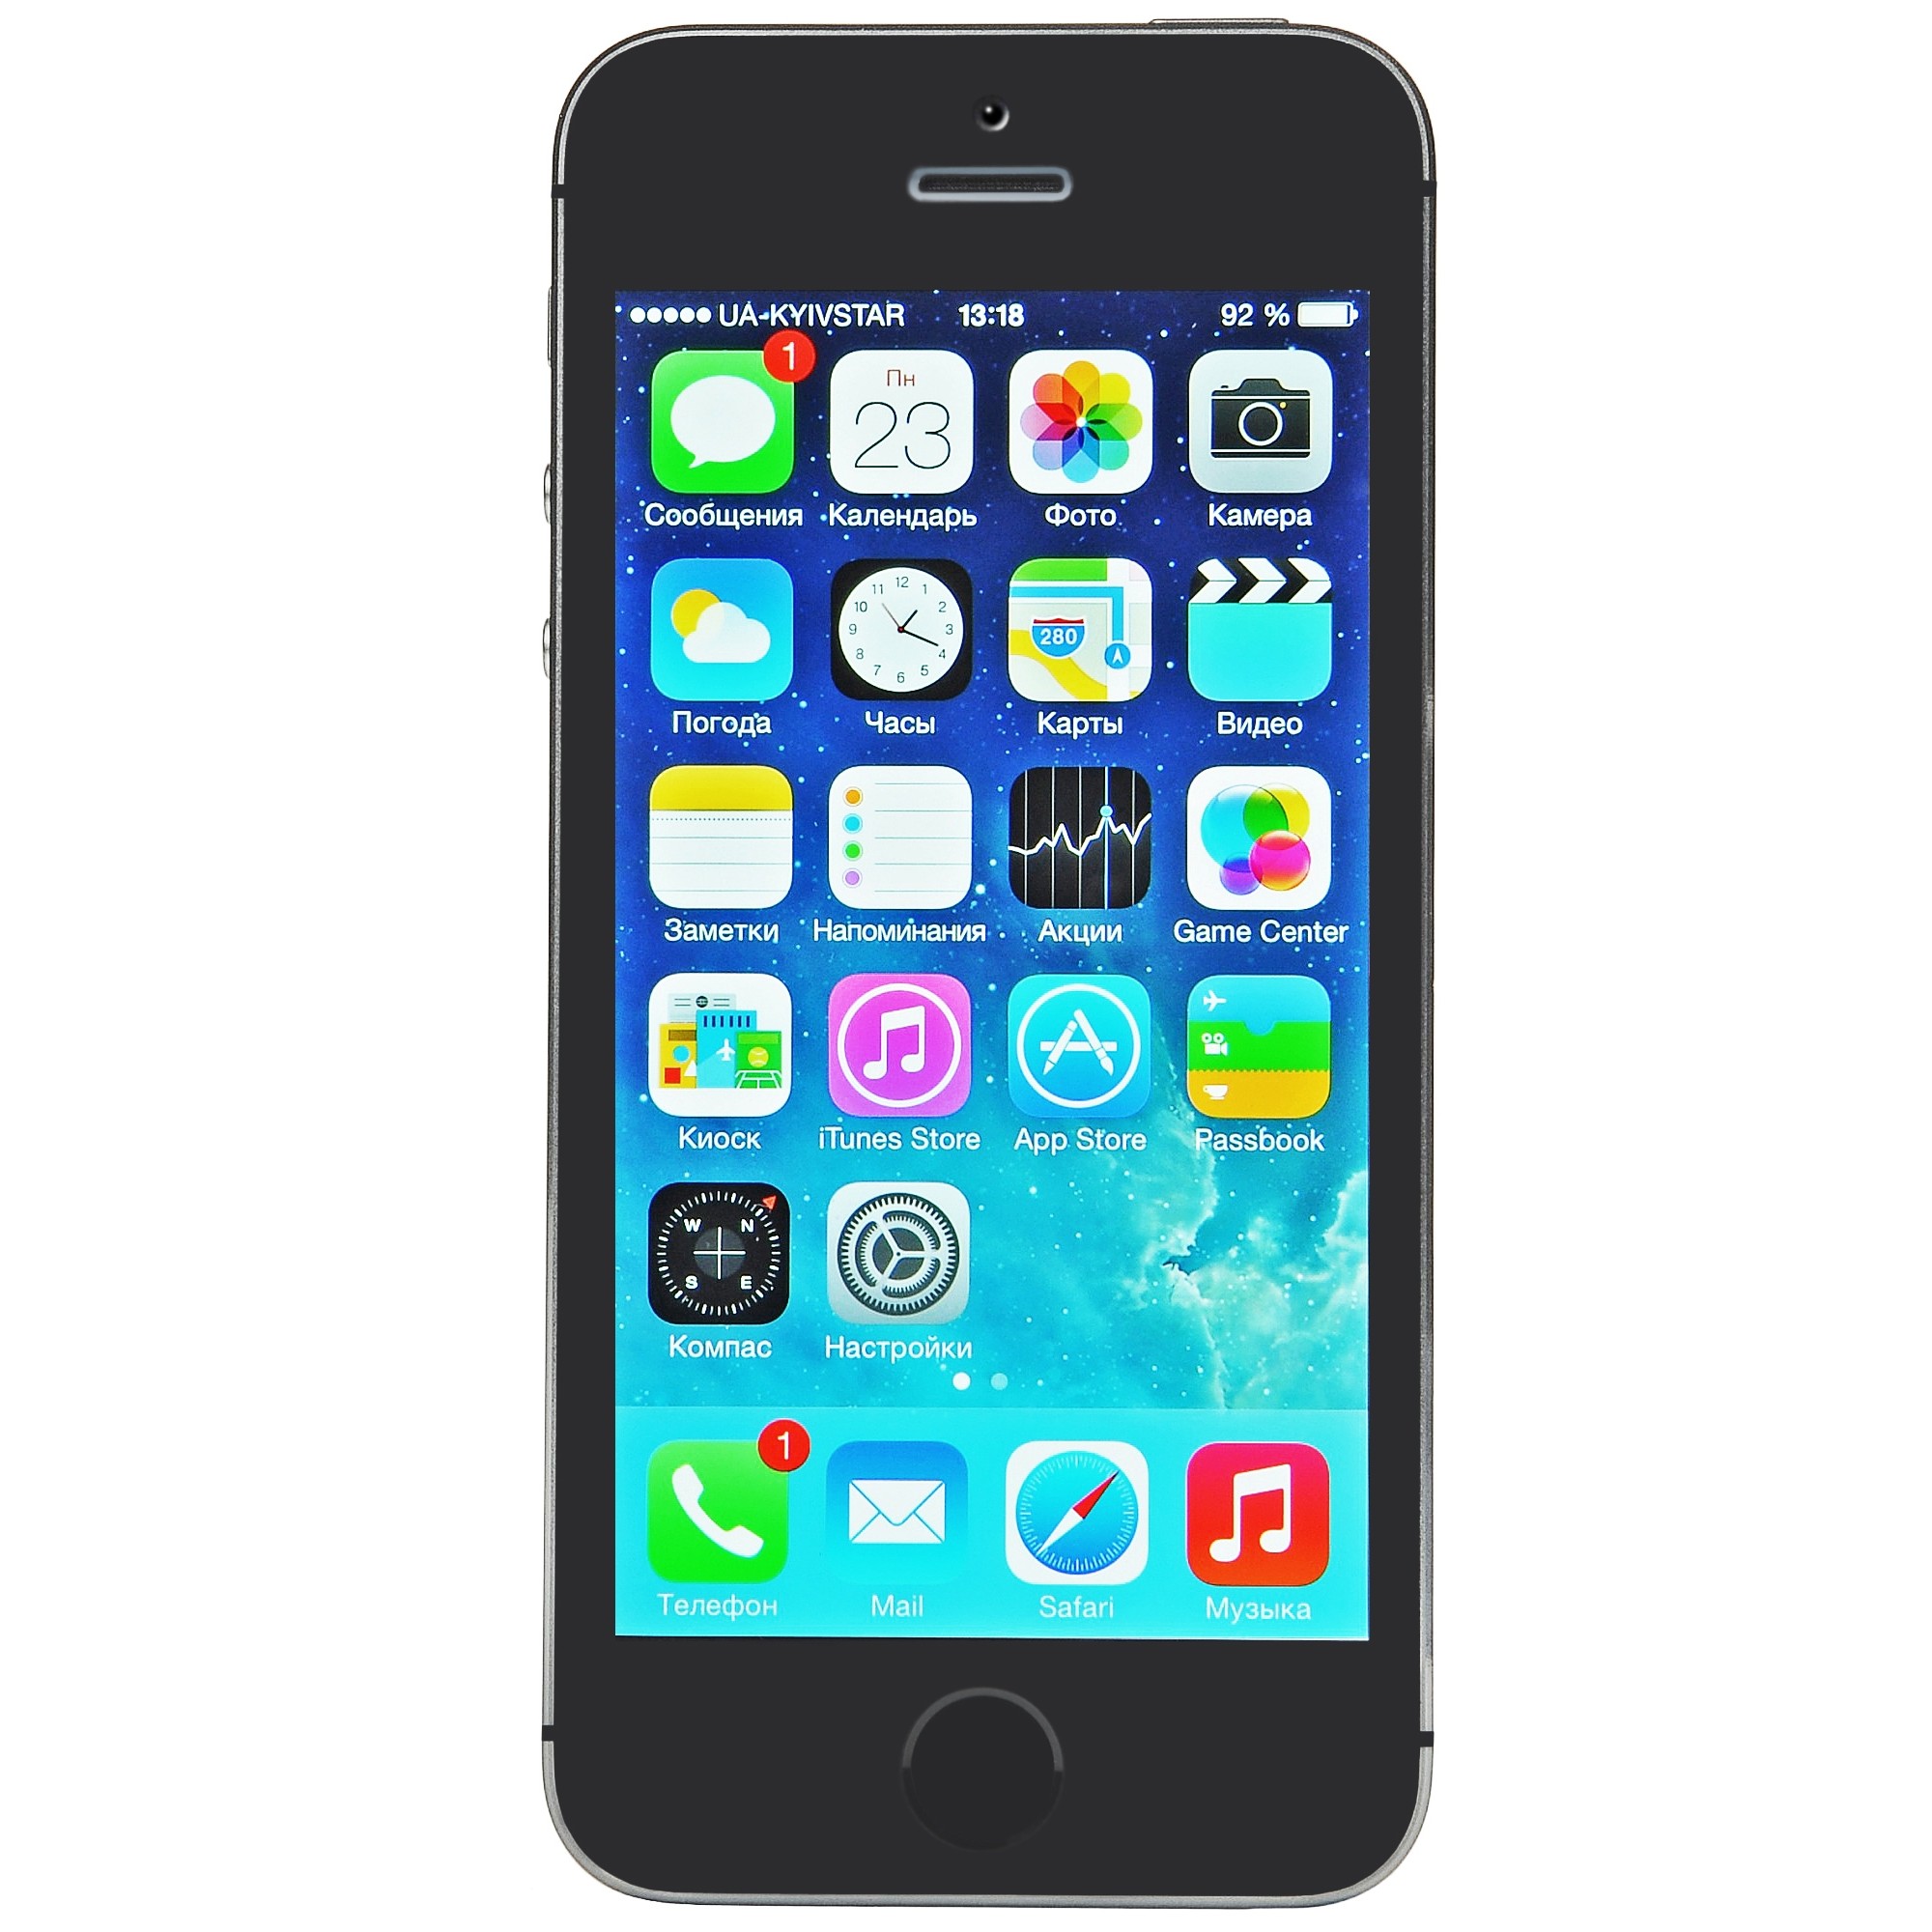 Apple iPhone 5S 32GB (Space Gray) - зображення 1